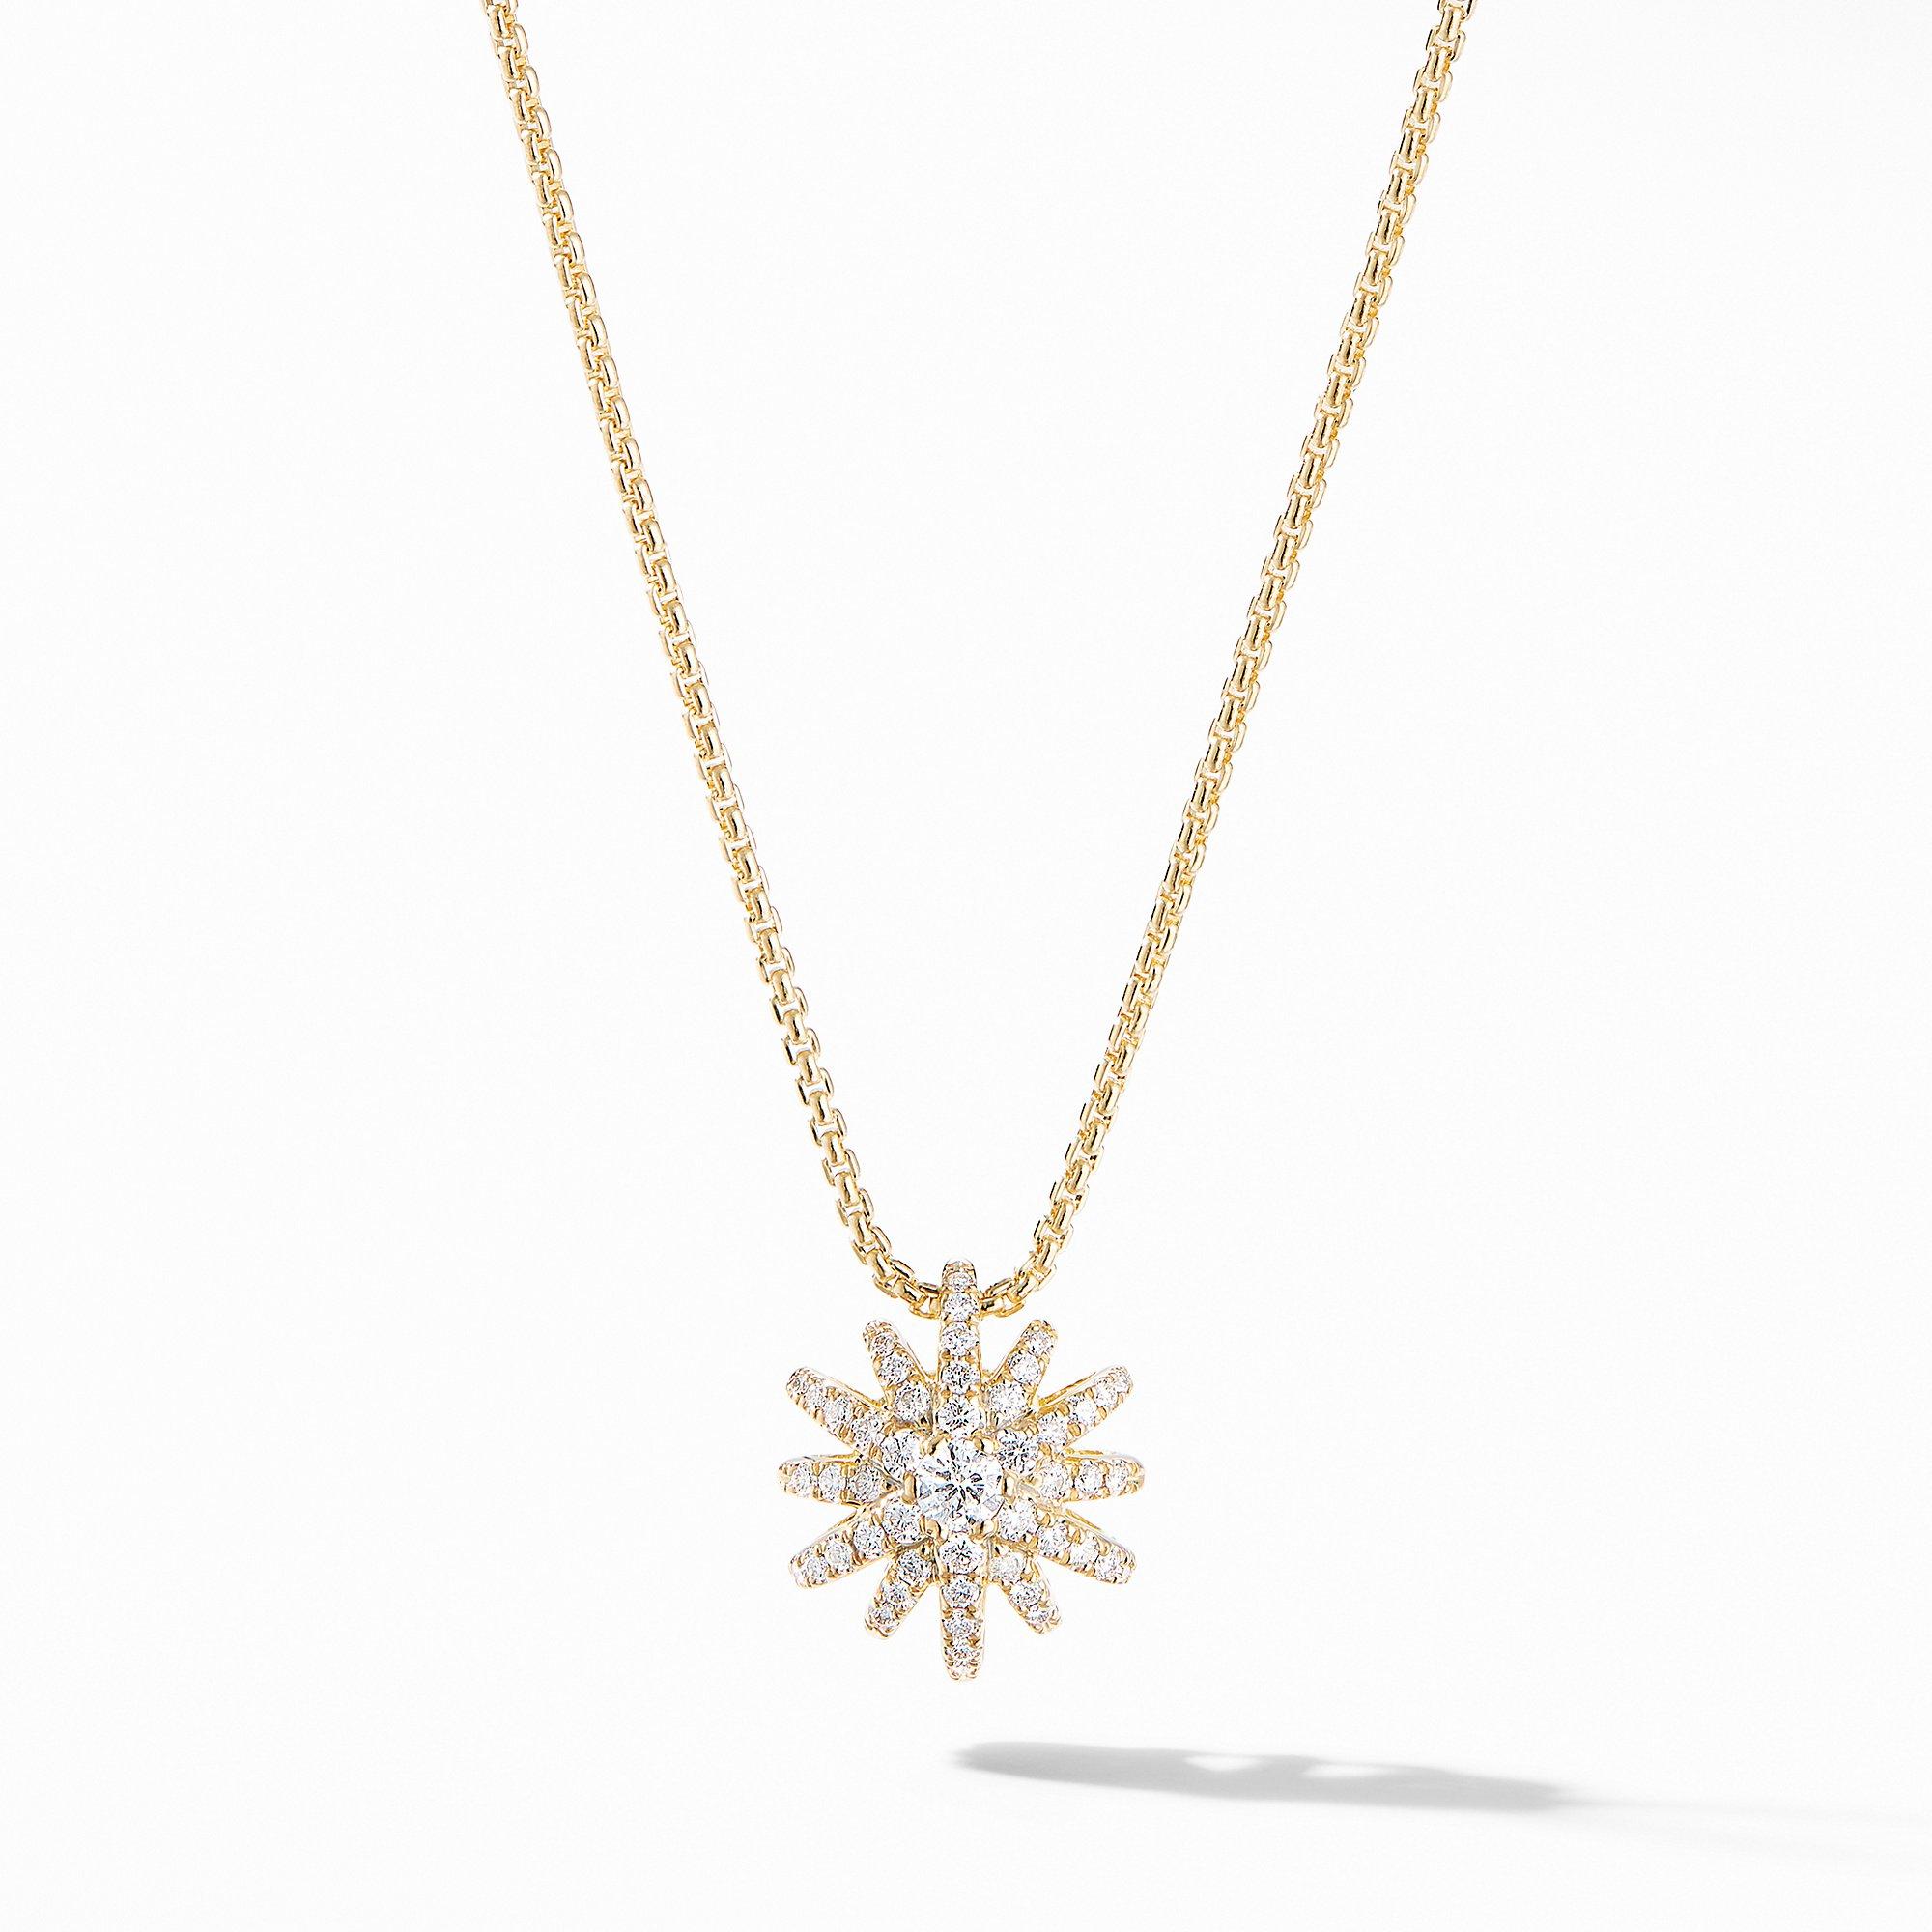 David Yurman Starburst Pendant Necklace in 18k Yellow Gold with Pave Diamonds